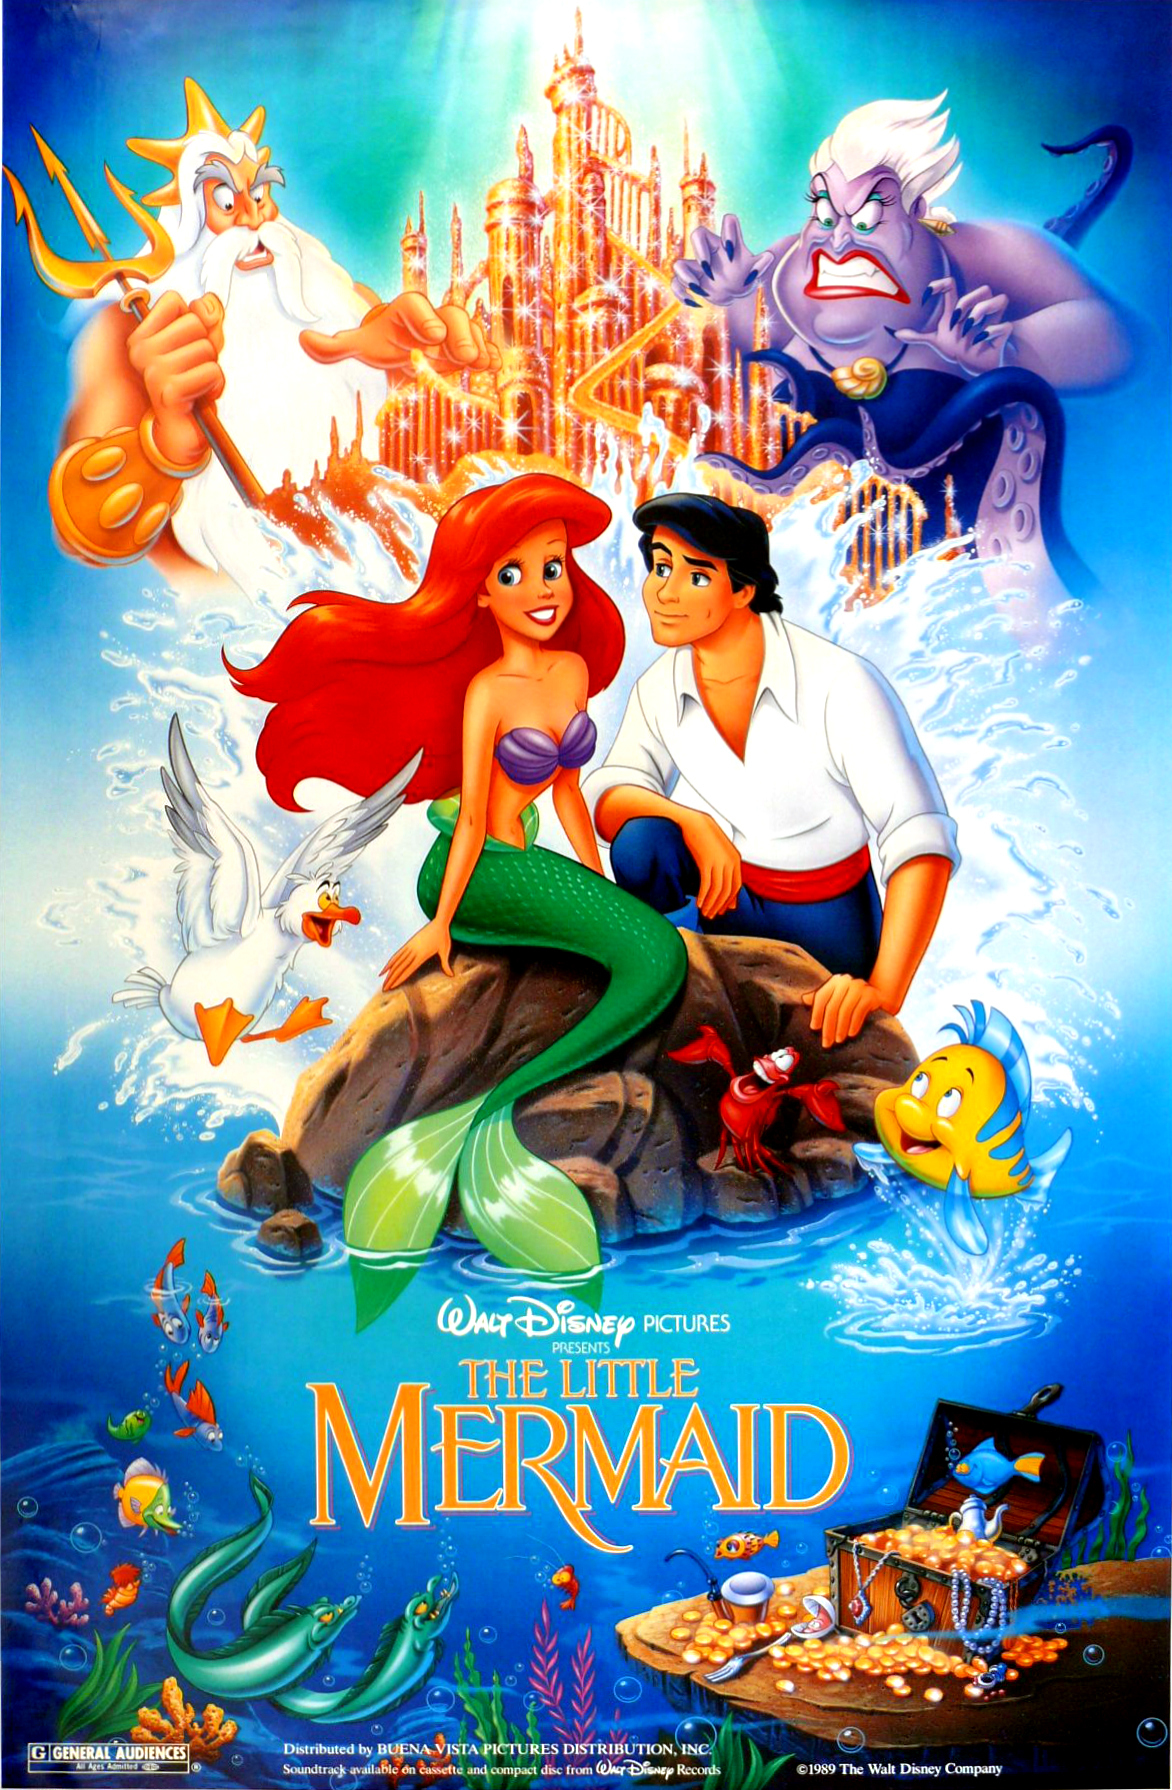 The Mermaid movie